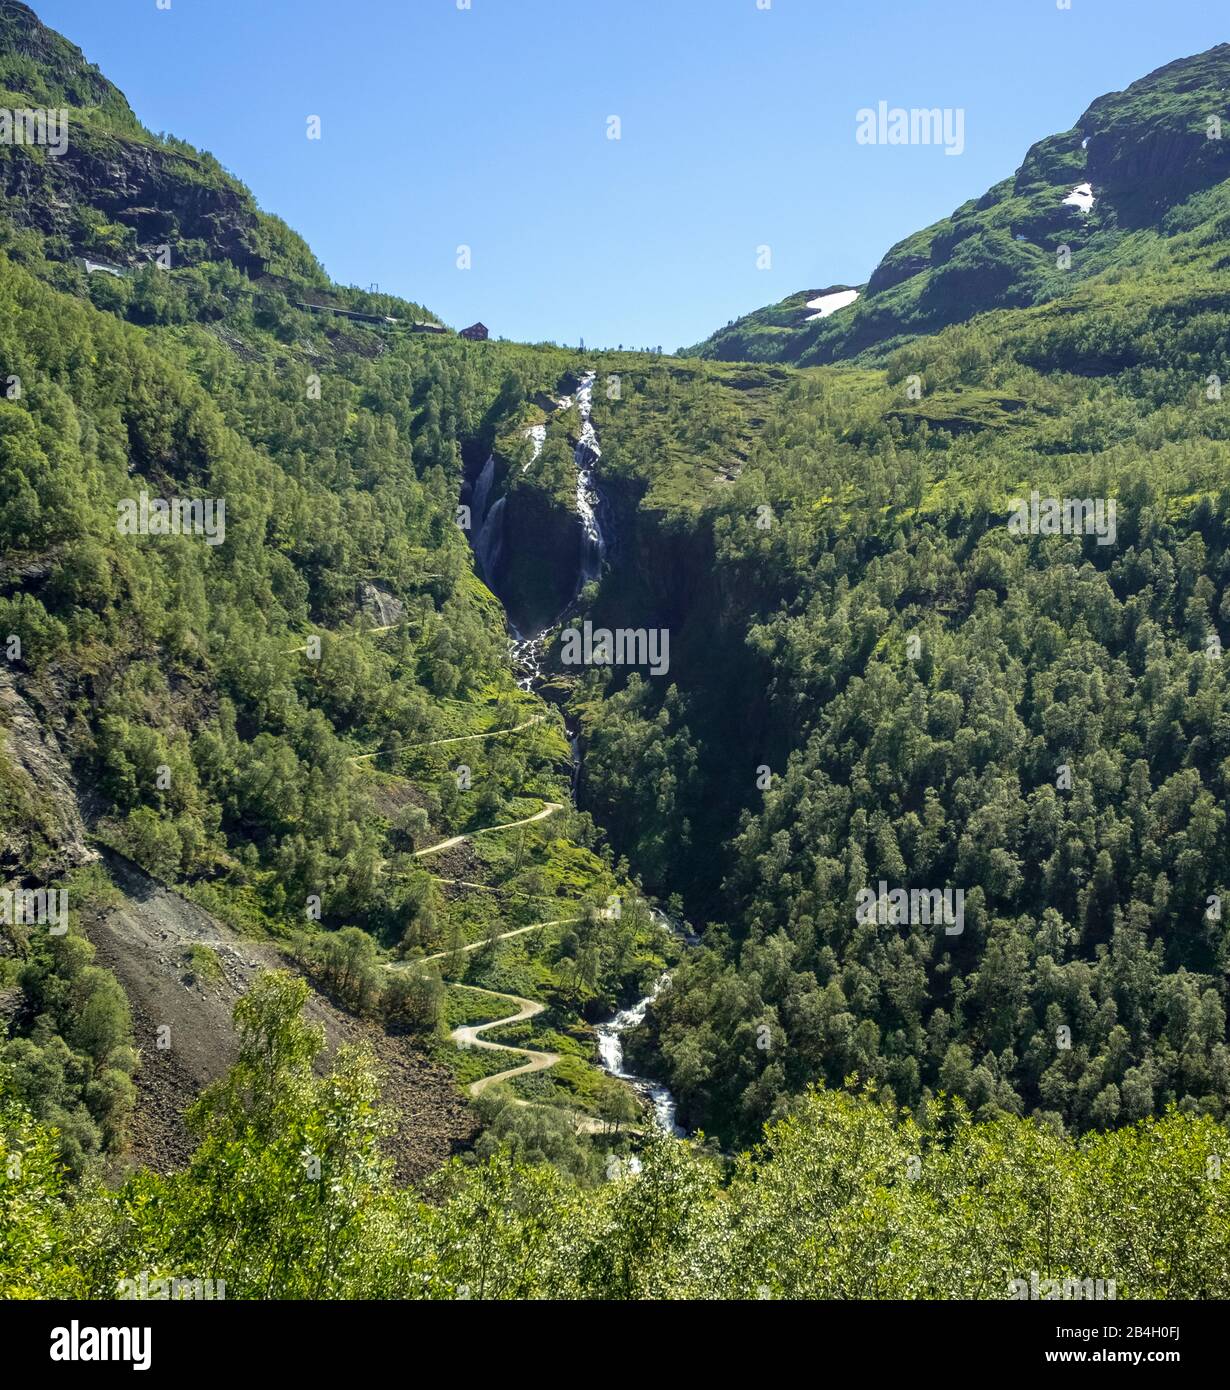 Cascade de Kjossfossen, cascade près de Fureberget, montagne, forêt, route, ciel Fåm, Sogn og Fjordane, Norvège, Scandinavie, Europe Banque D'Images